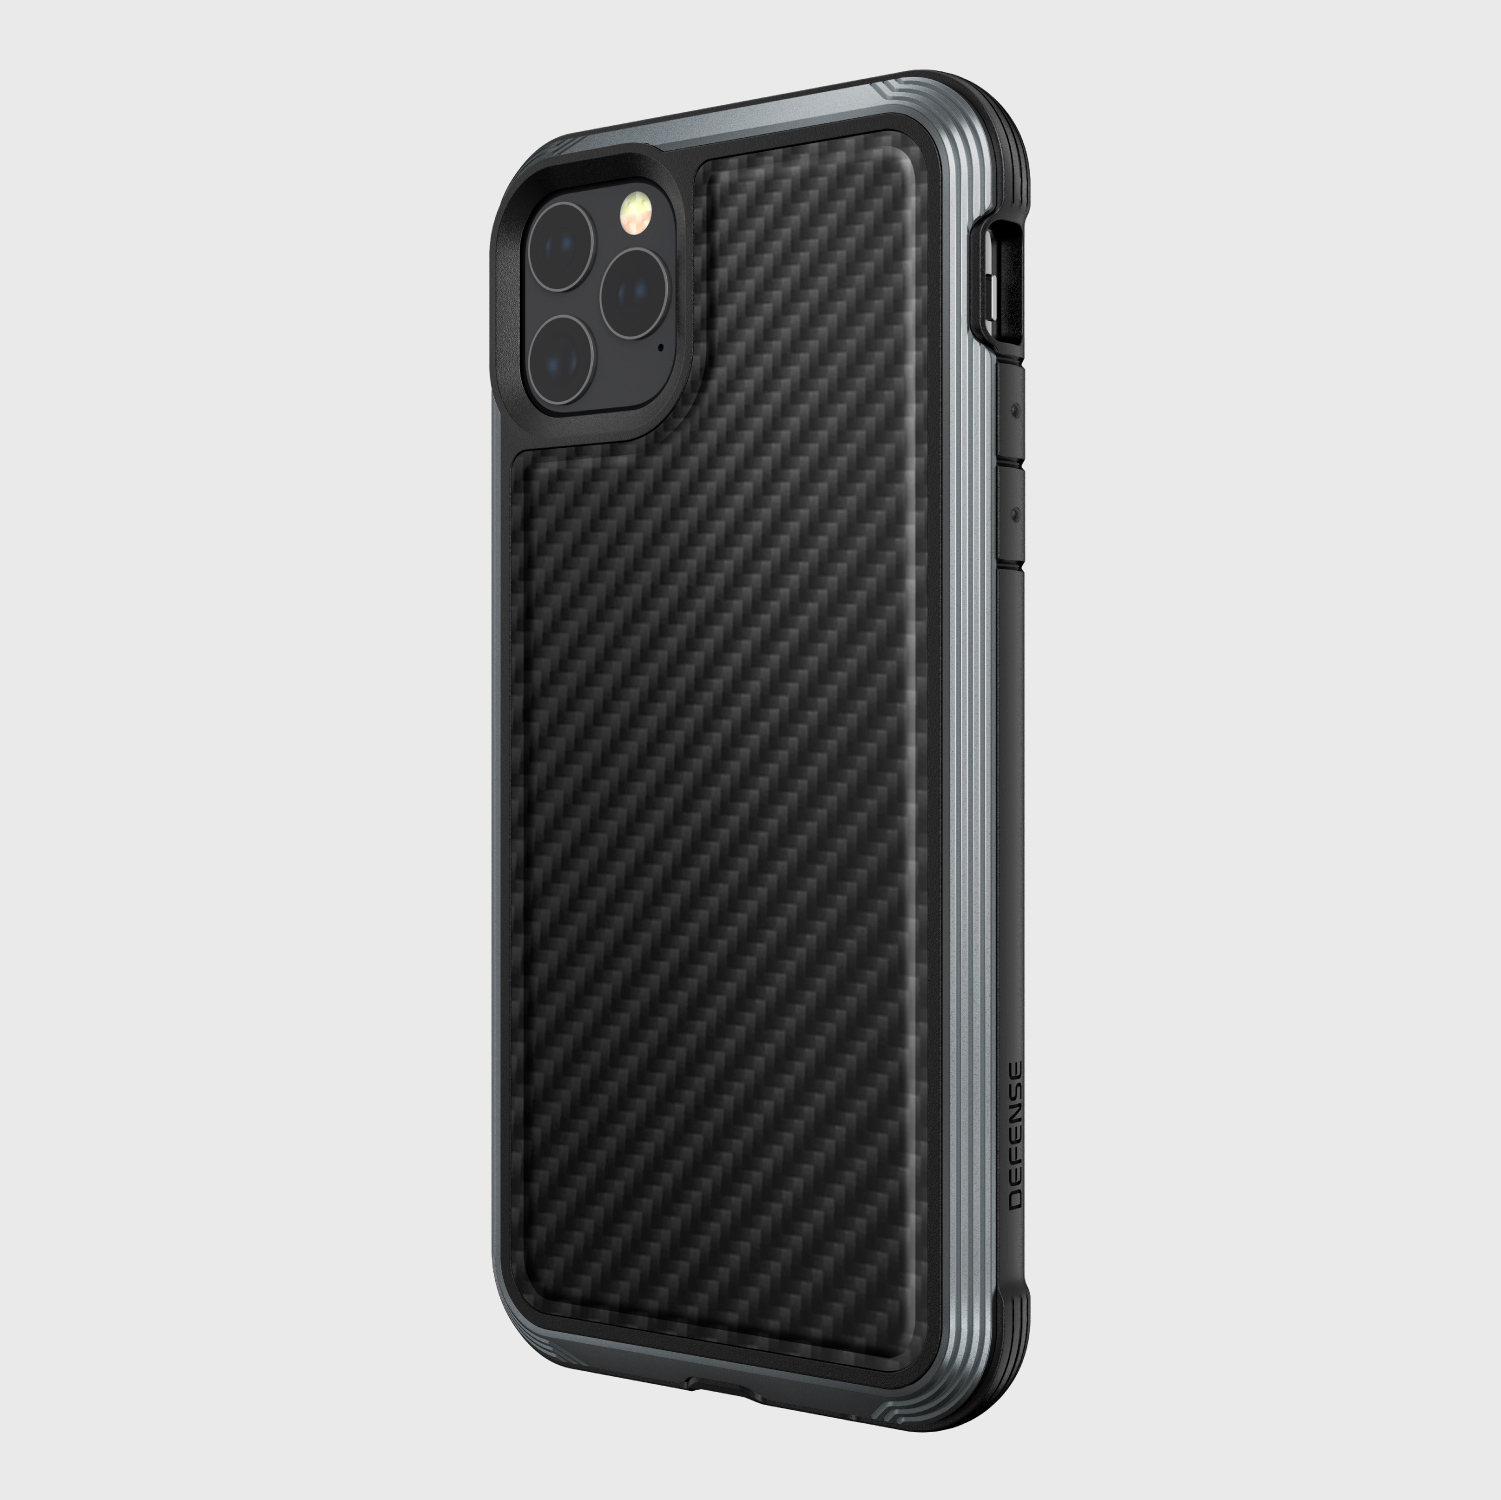 iPhone 11 Pro Max, case Defense Lux, black carbon fiber